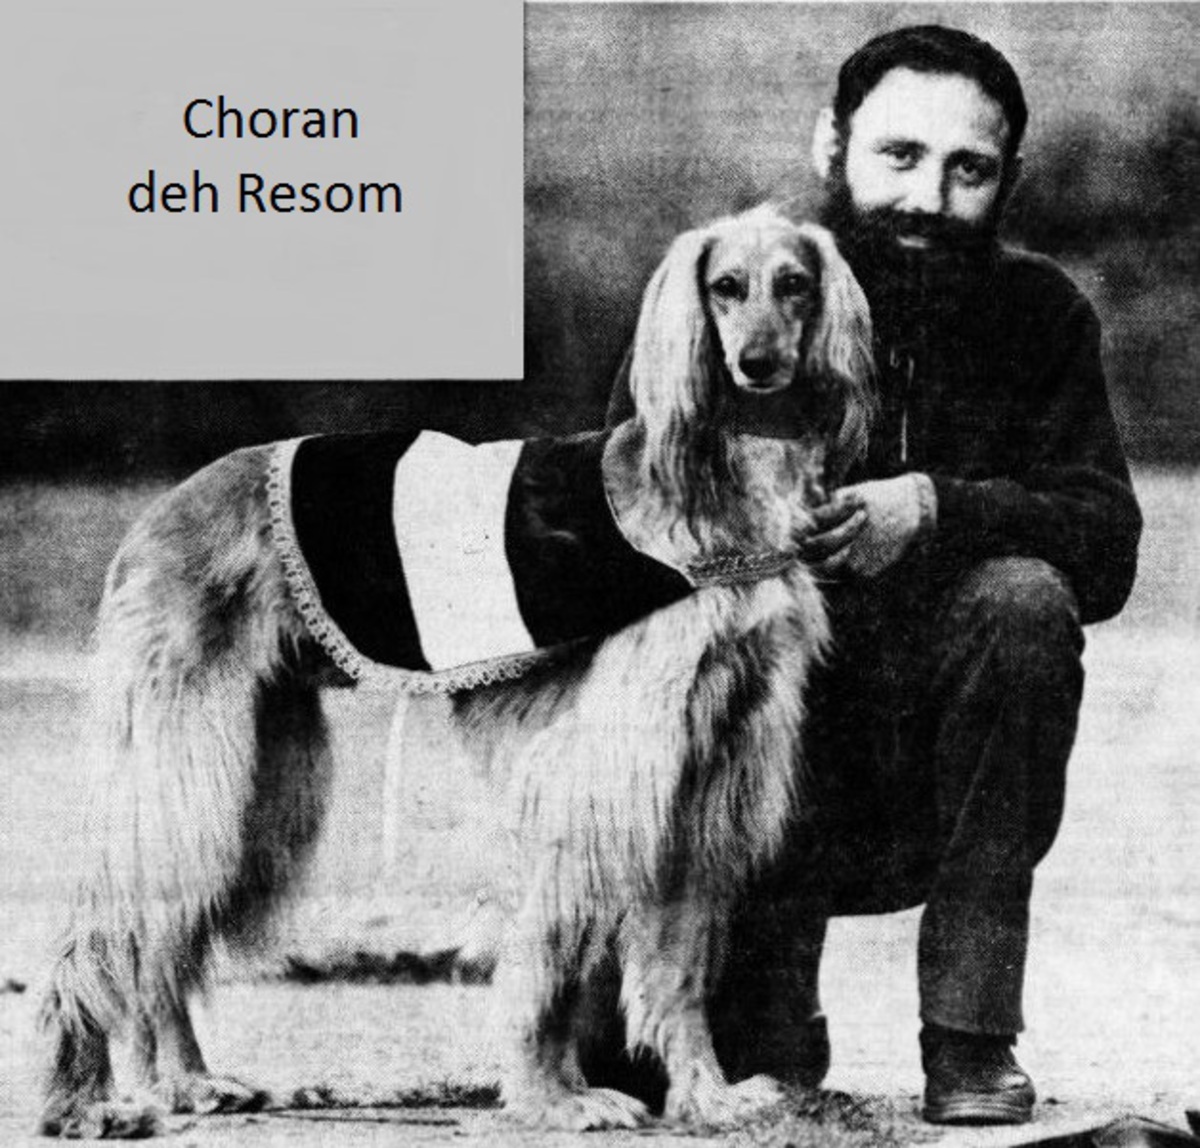 Image of Choran deh Resom